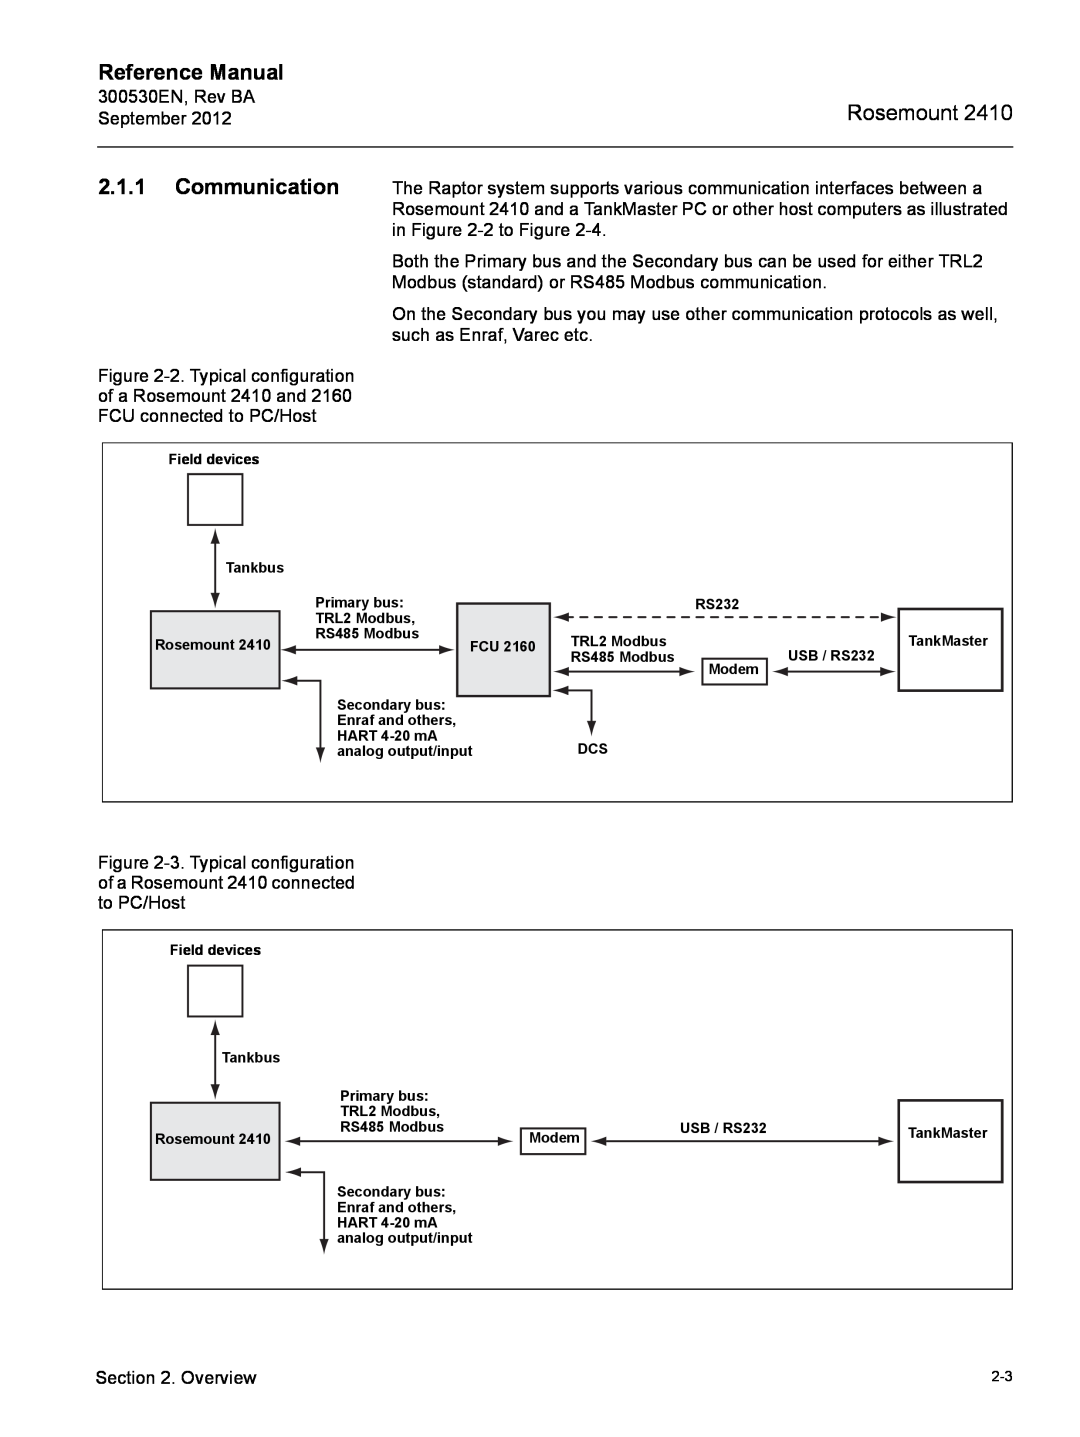 Emerson Process Management Rosemount 2410 manual Communication, Reference Manual 